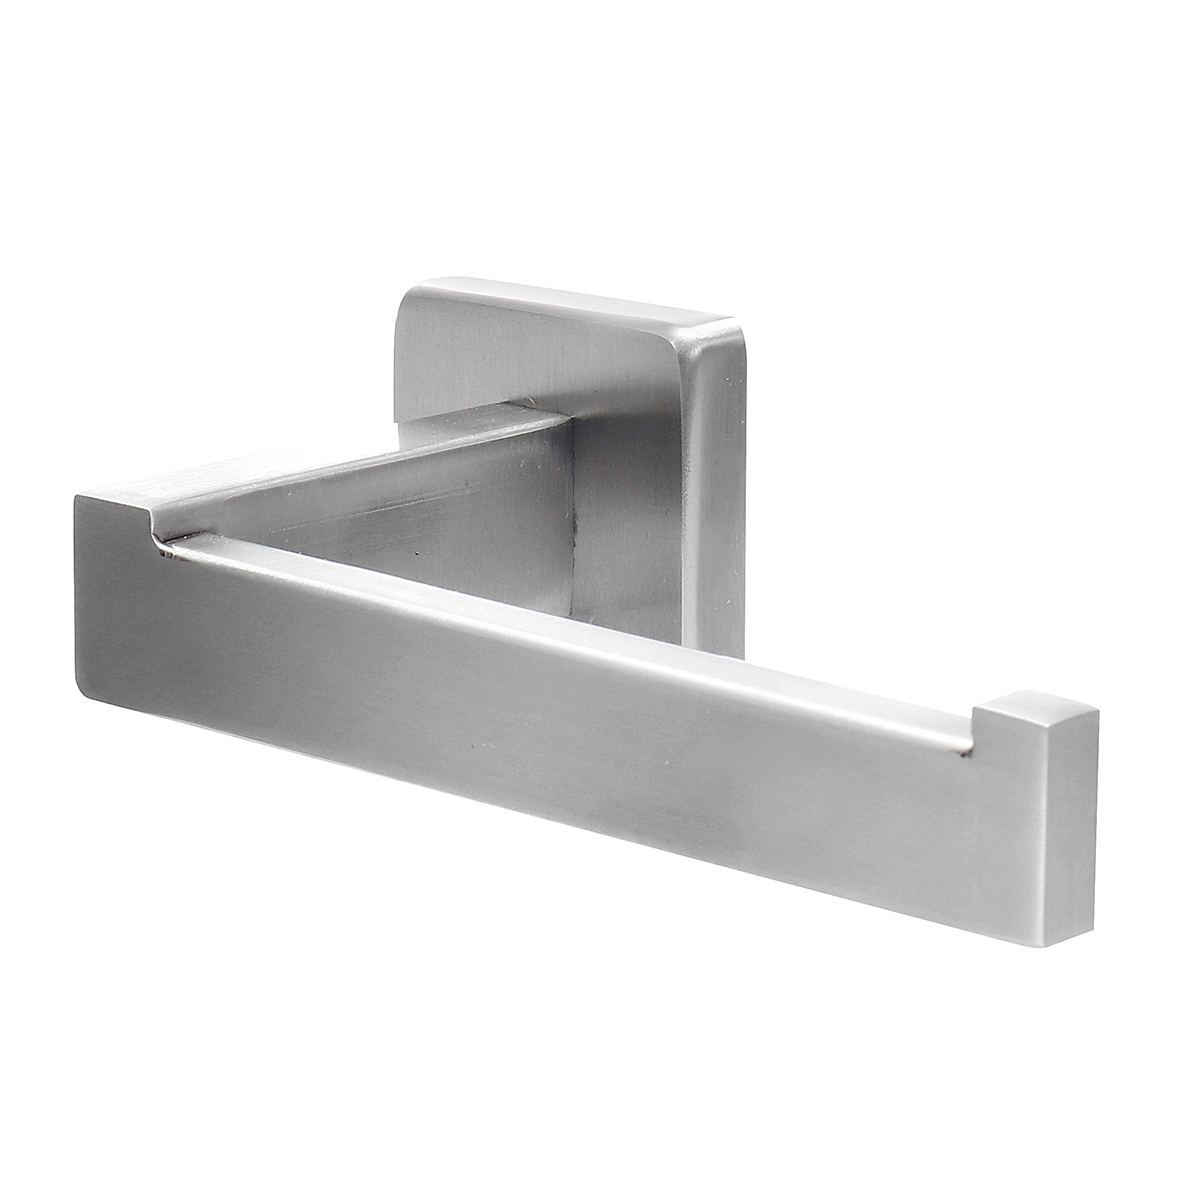 Stainless-Steel-Toilet-Paper-Holder-Storage-Shelf-Wall-Mounted-Bathroom-Rack-1658777-5